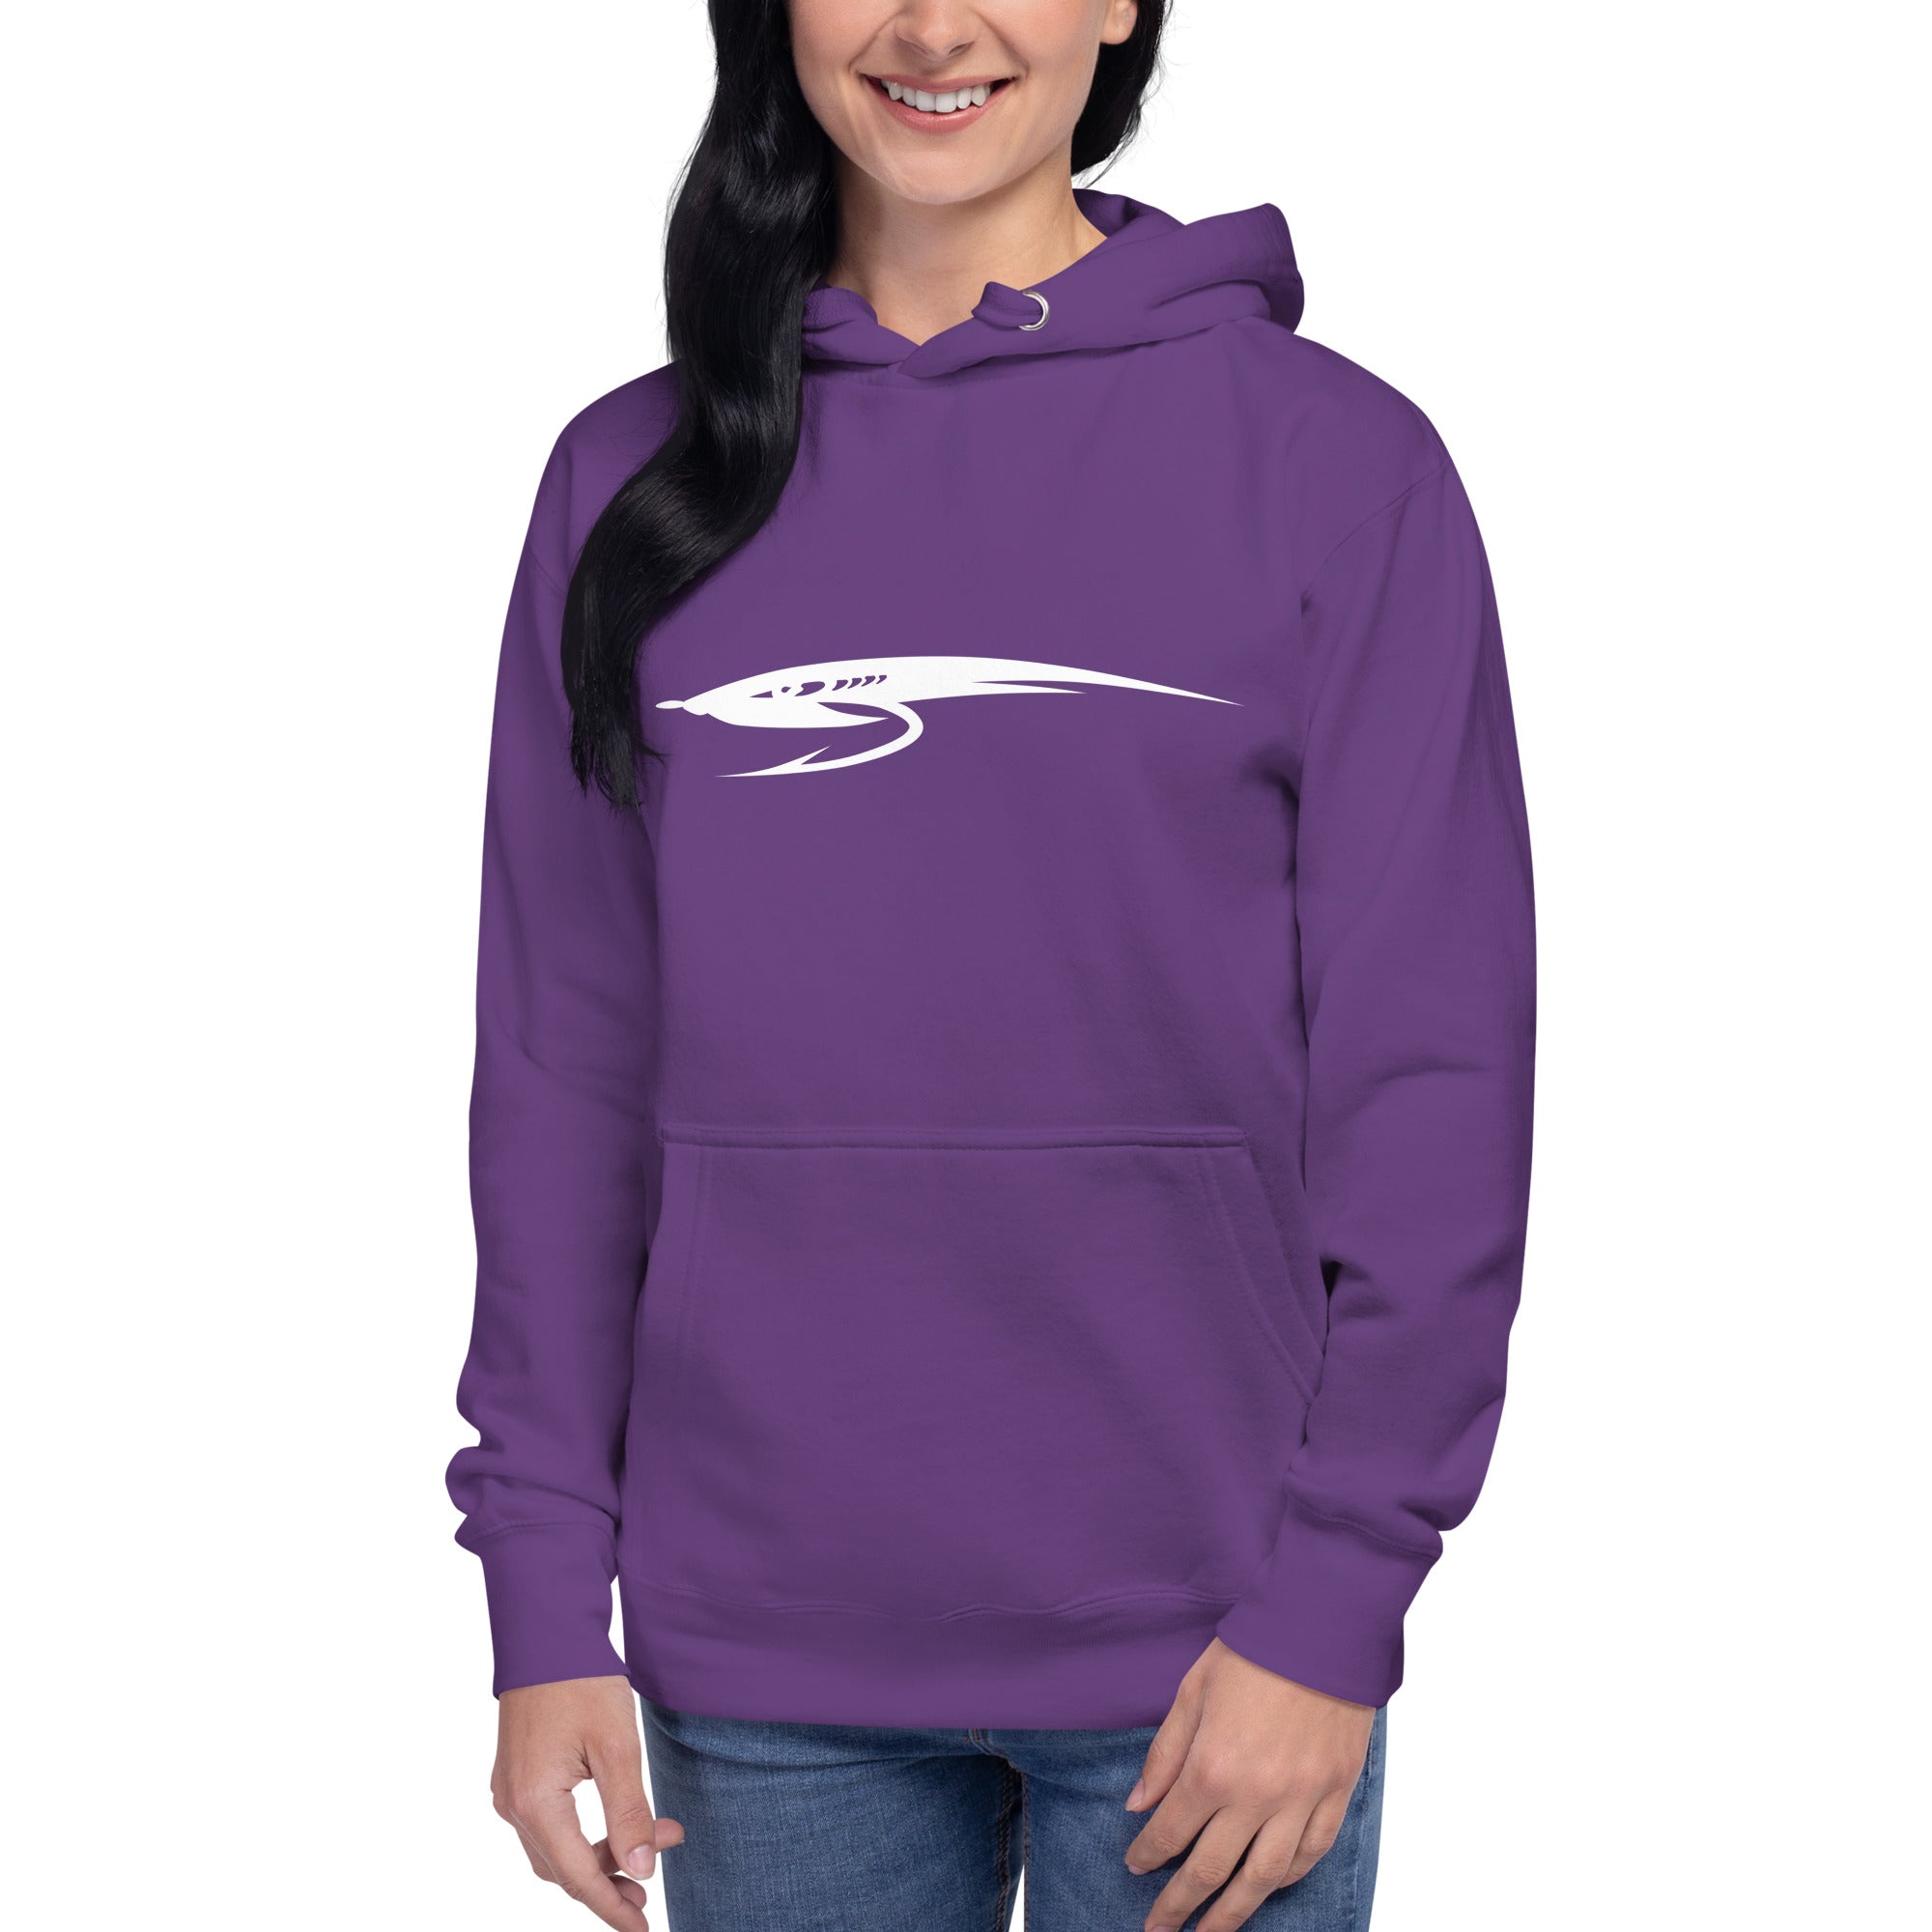 unisex-premium-hoodie-purple-front-639cc7d8a0b33.jpg